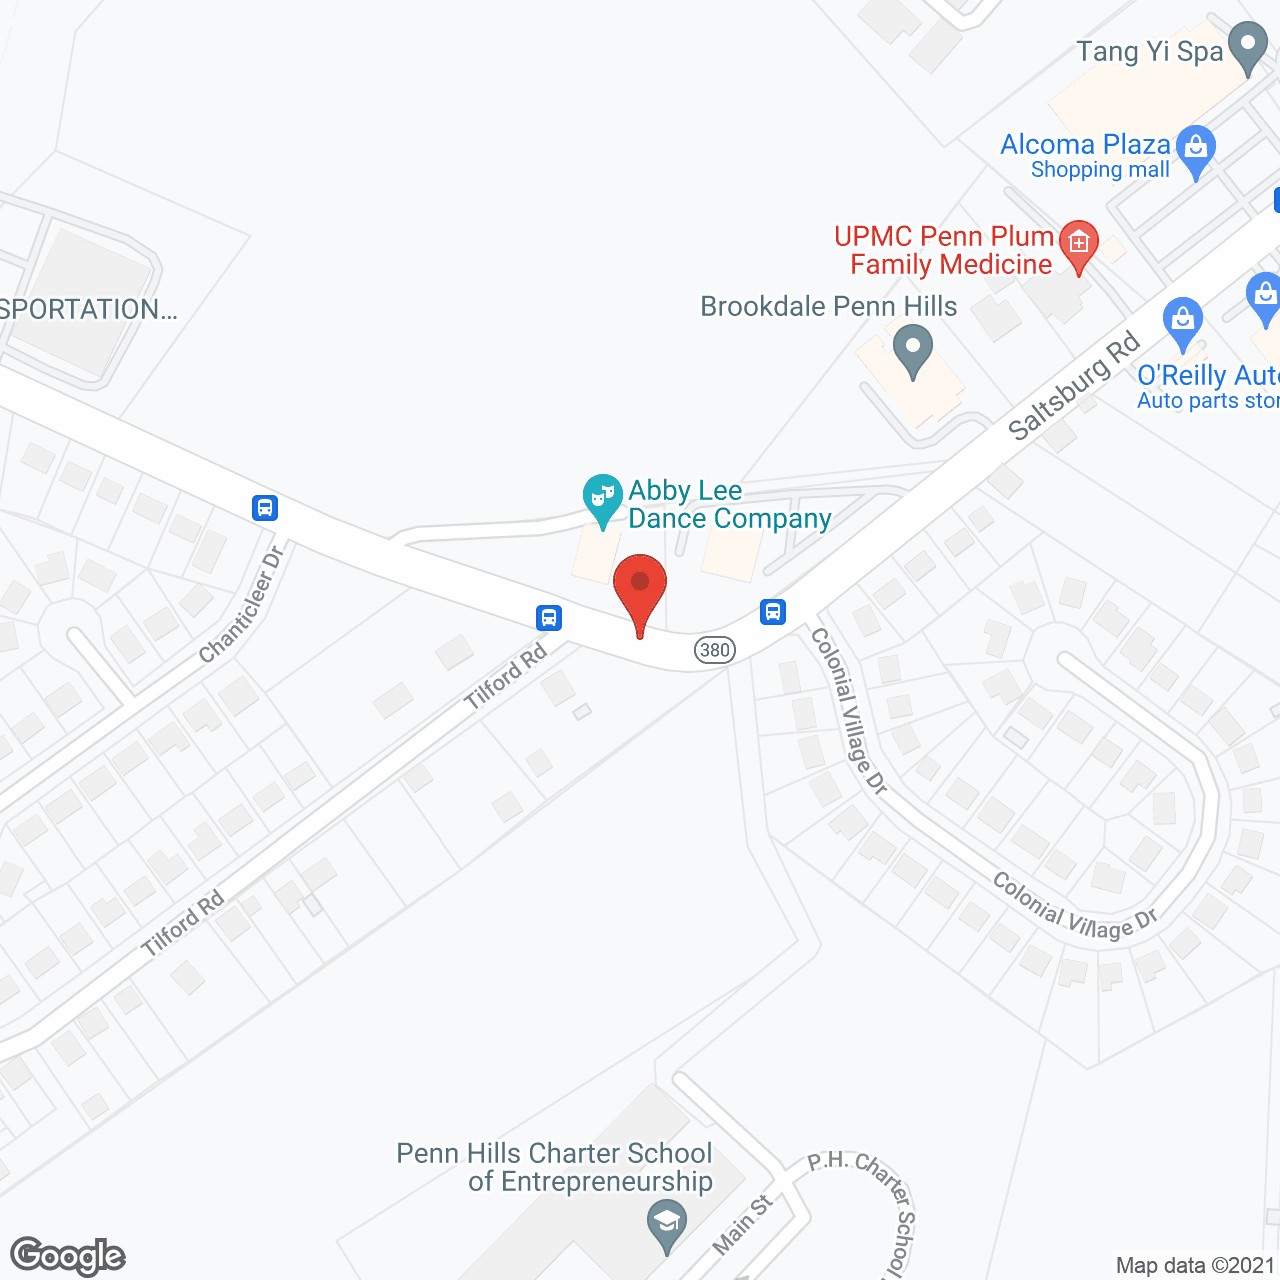 Brookdale Penn Hills in google map